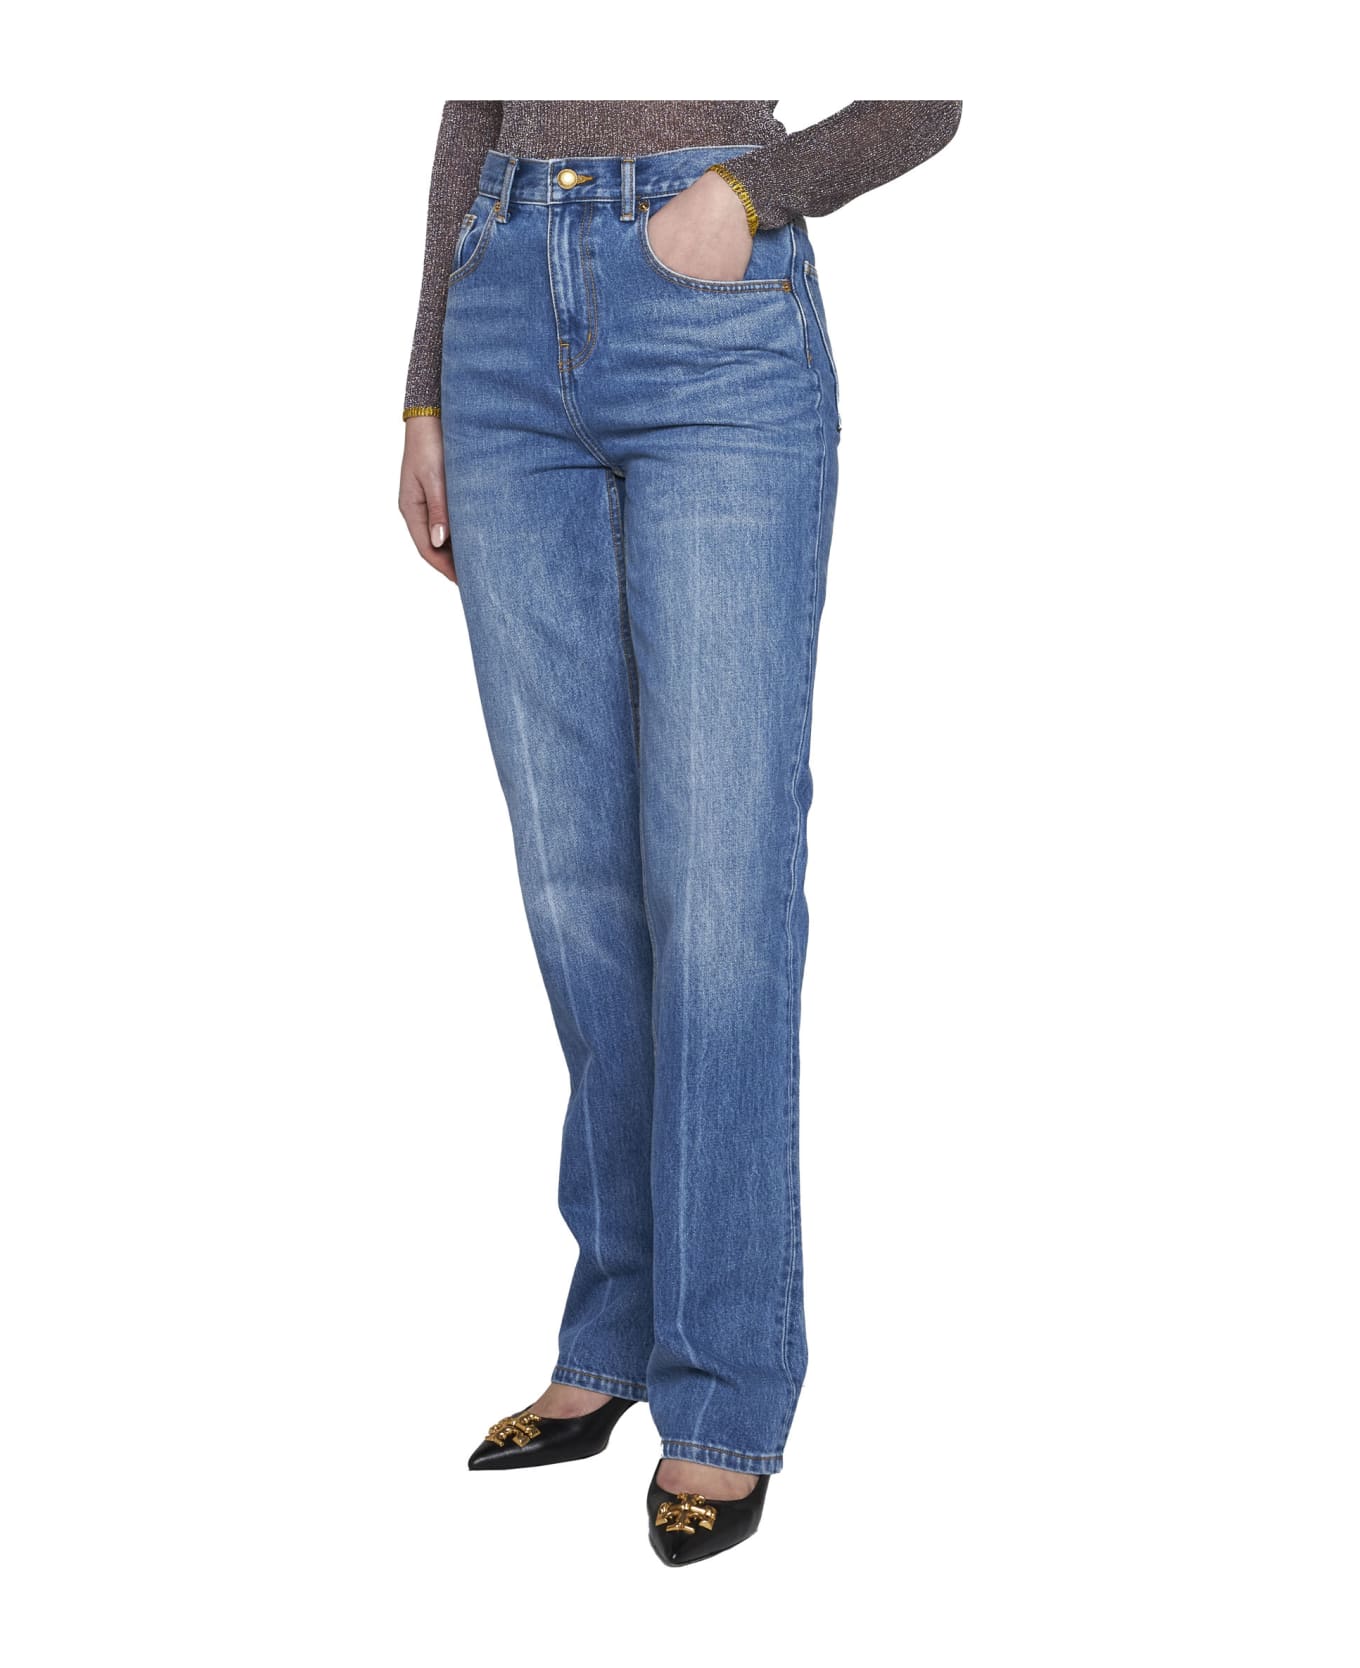 Tory Burch 5-pocket Straight-leg Jeans - Blue デニム